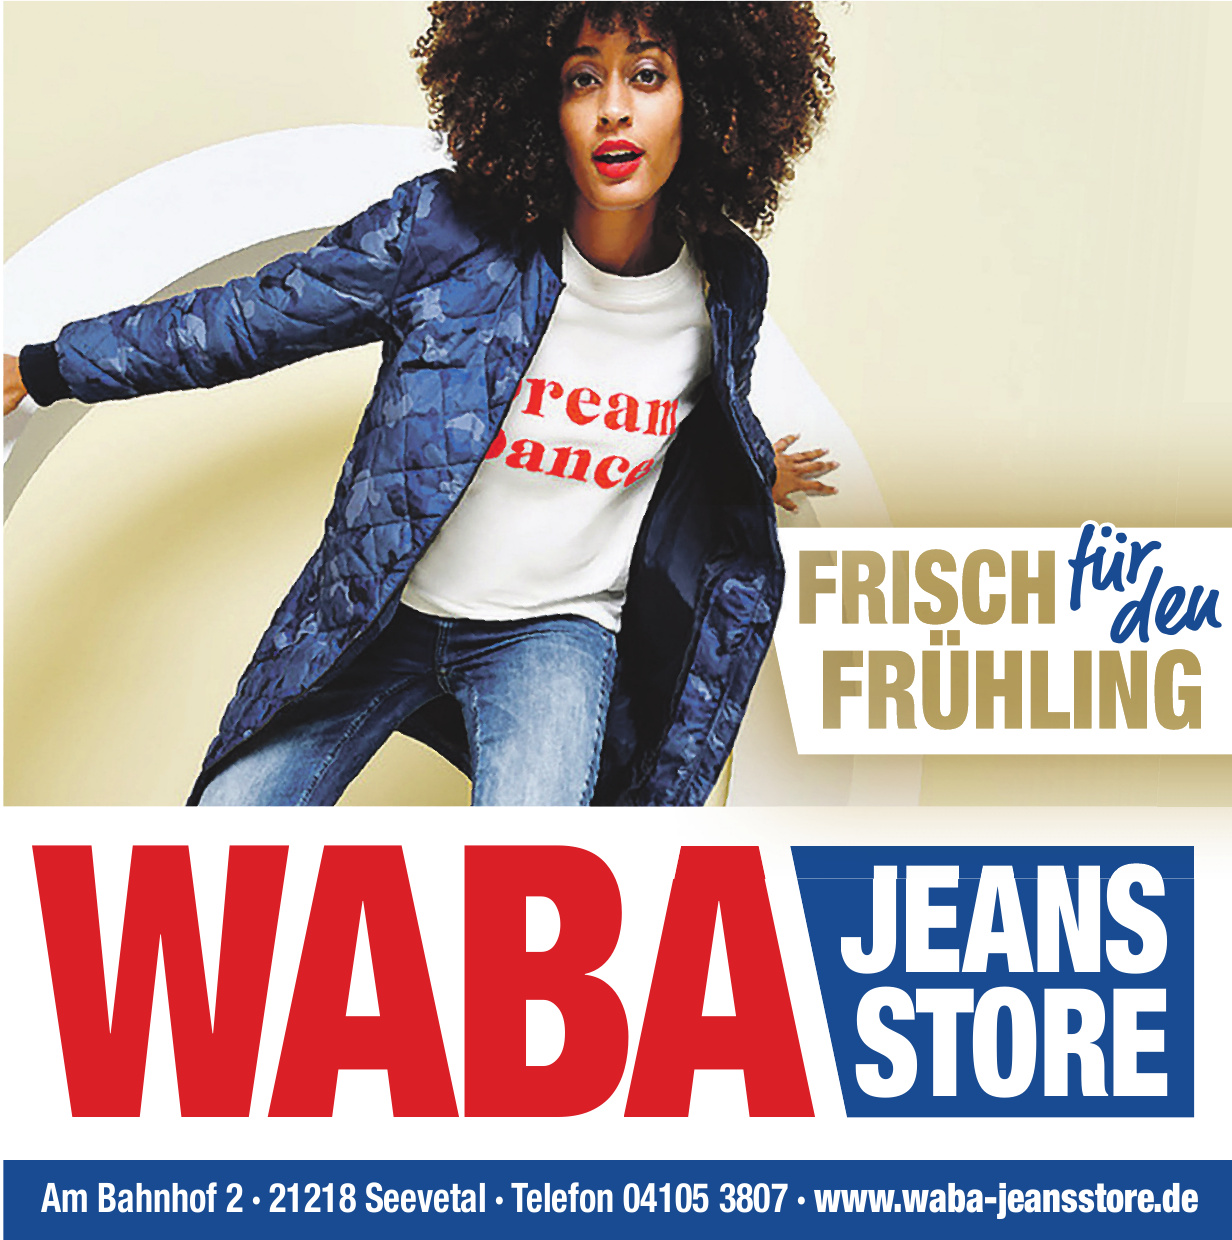 Waba - Jeans Store